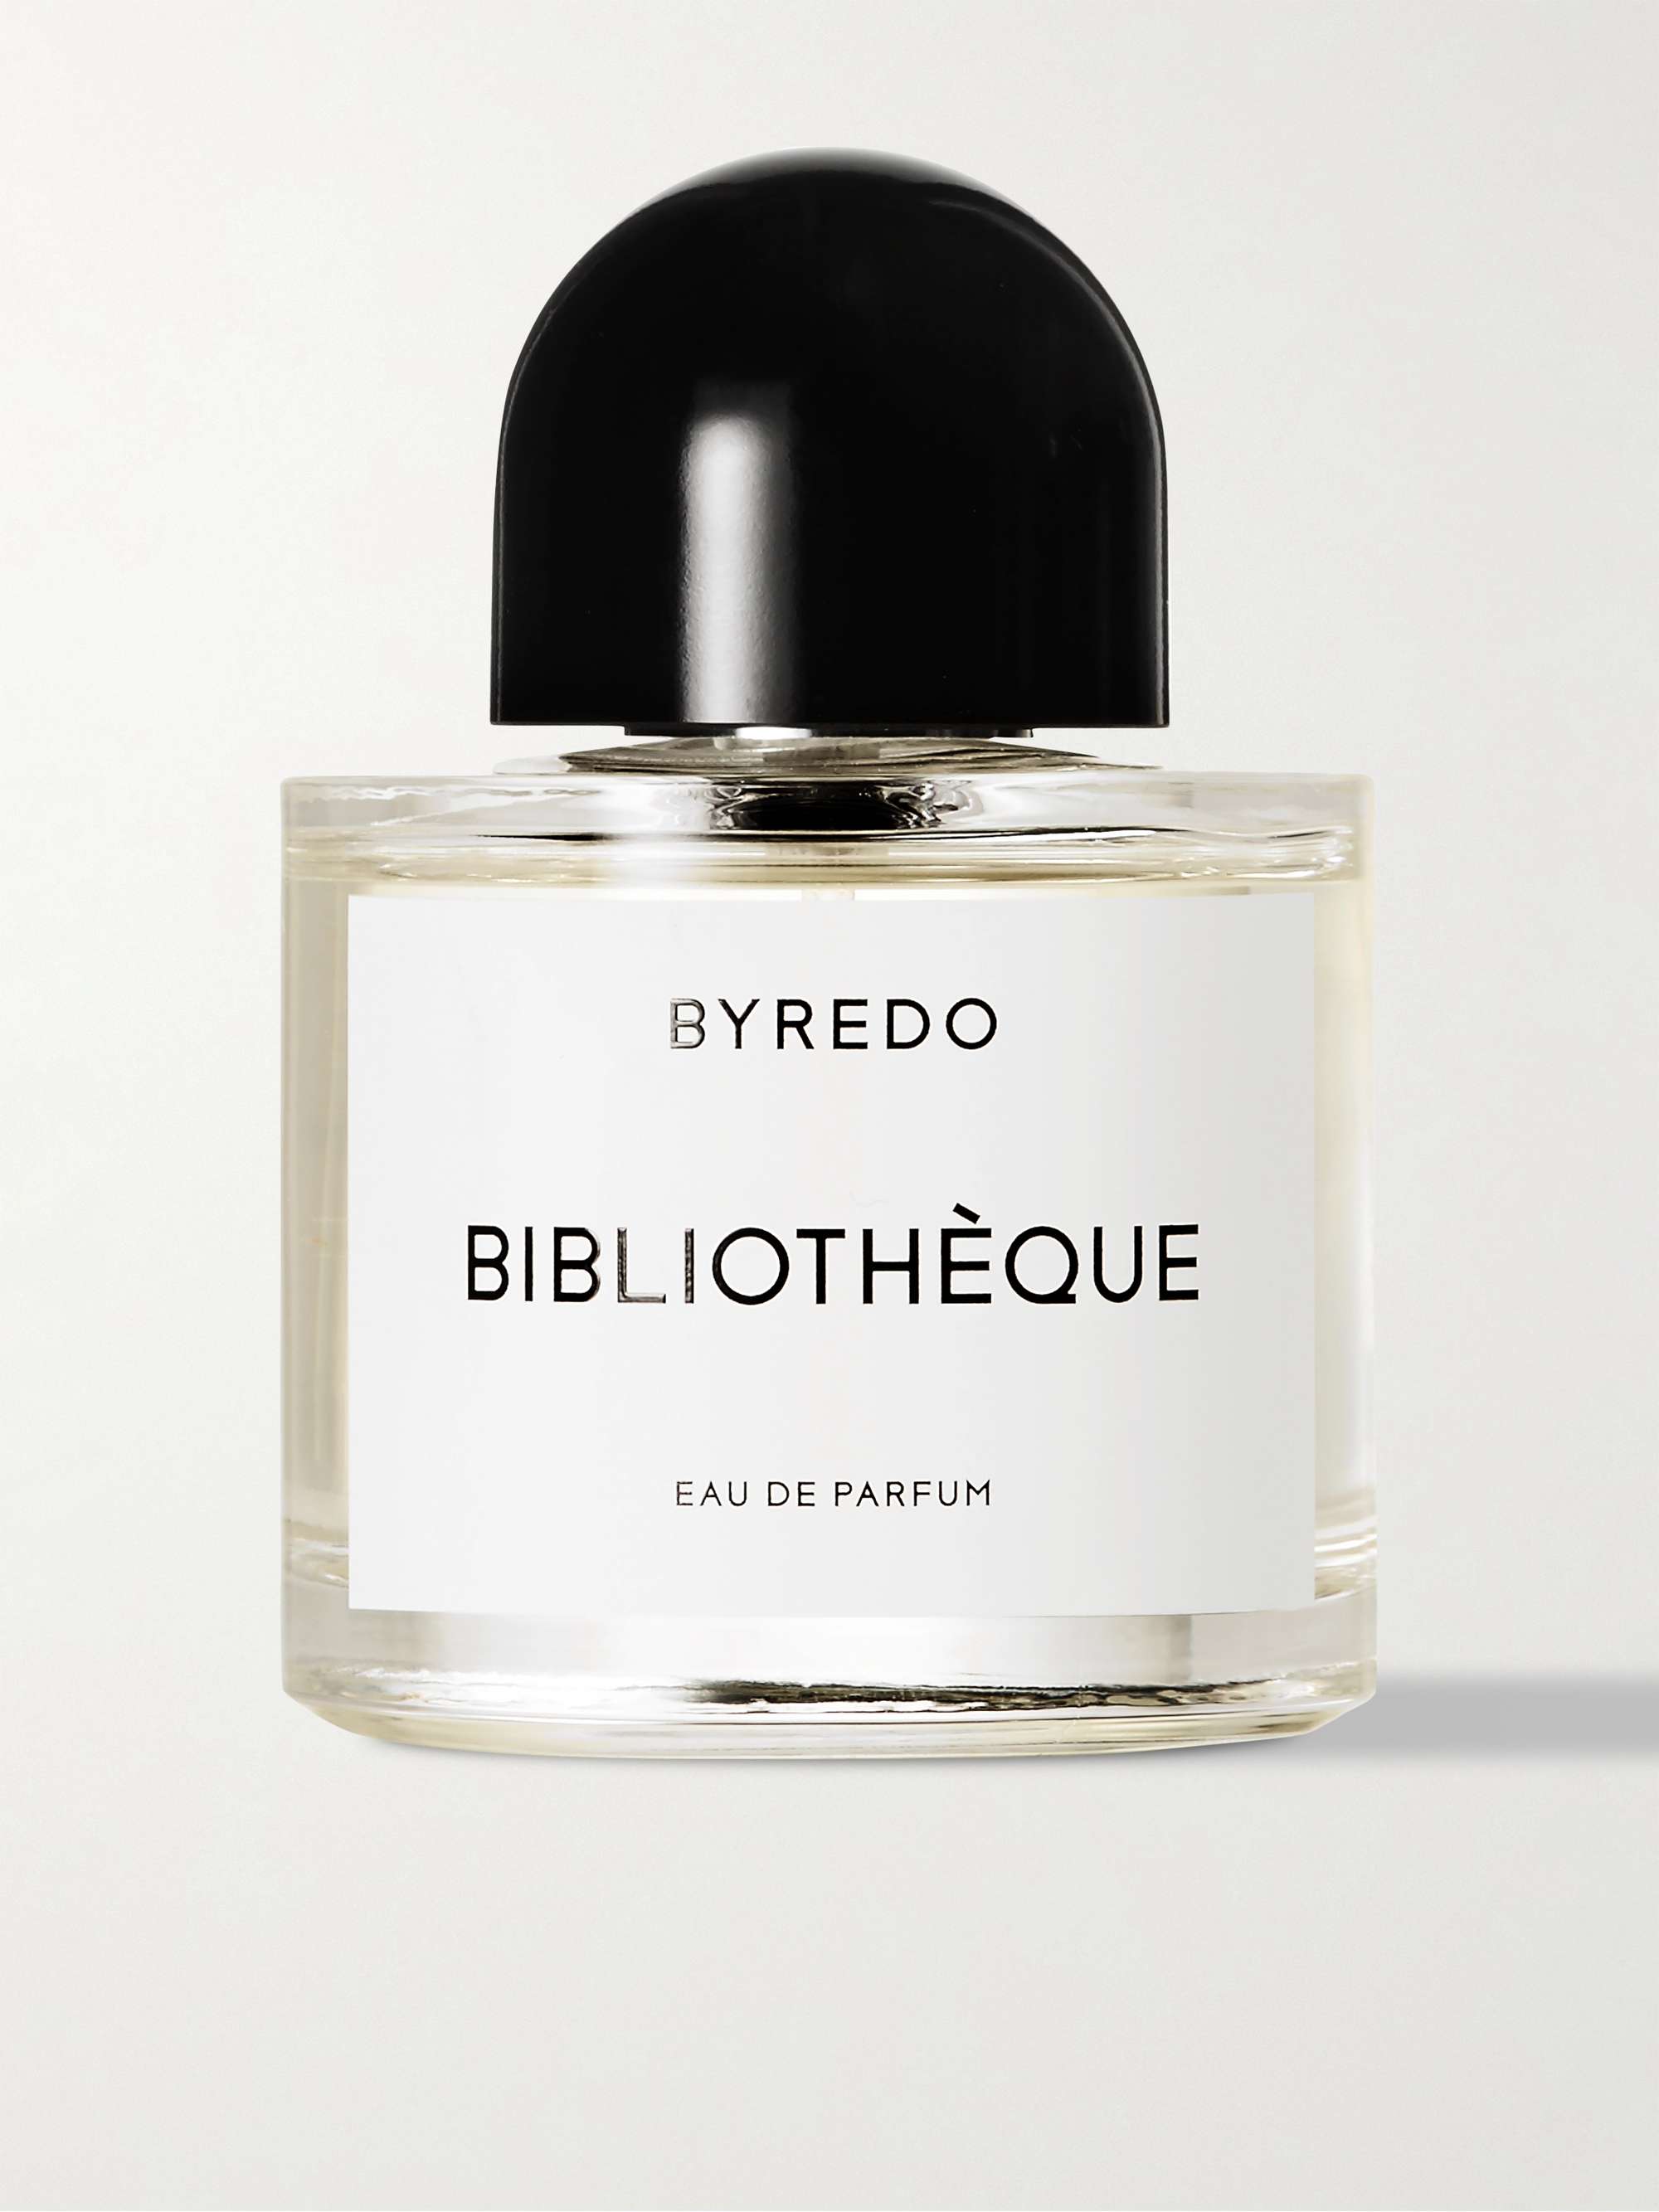 BYREDO Bibliothèque Eau de Parfum - Juniper Berries, Orris, Violet